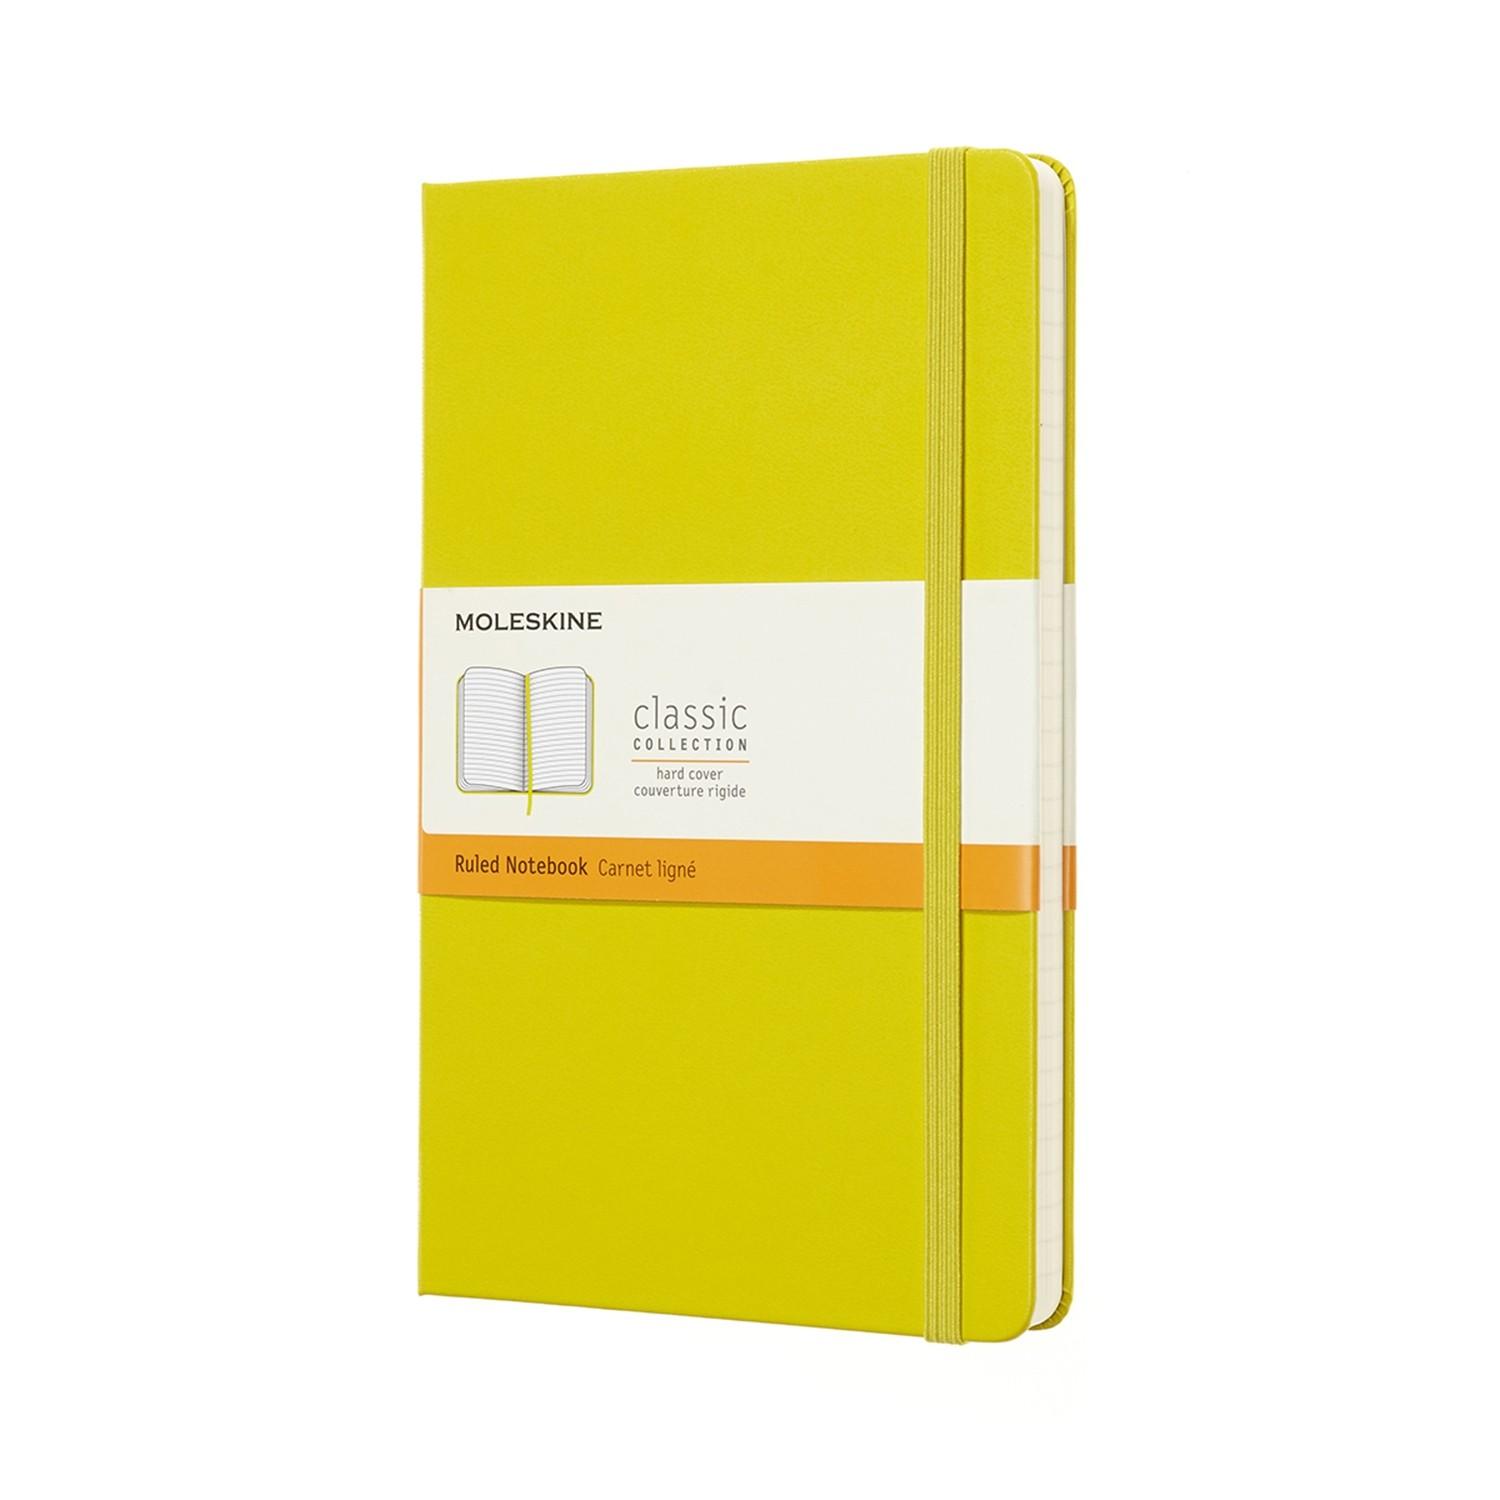 Moleskine Notebook Large Ruled Dandelion Yellow HaRD COVER